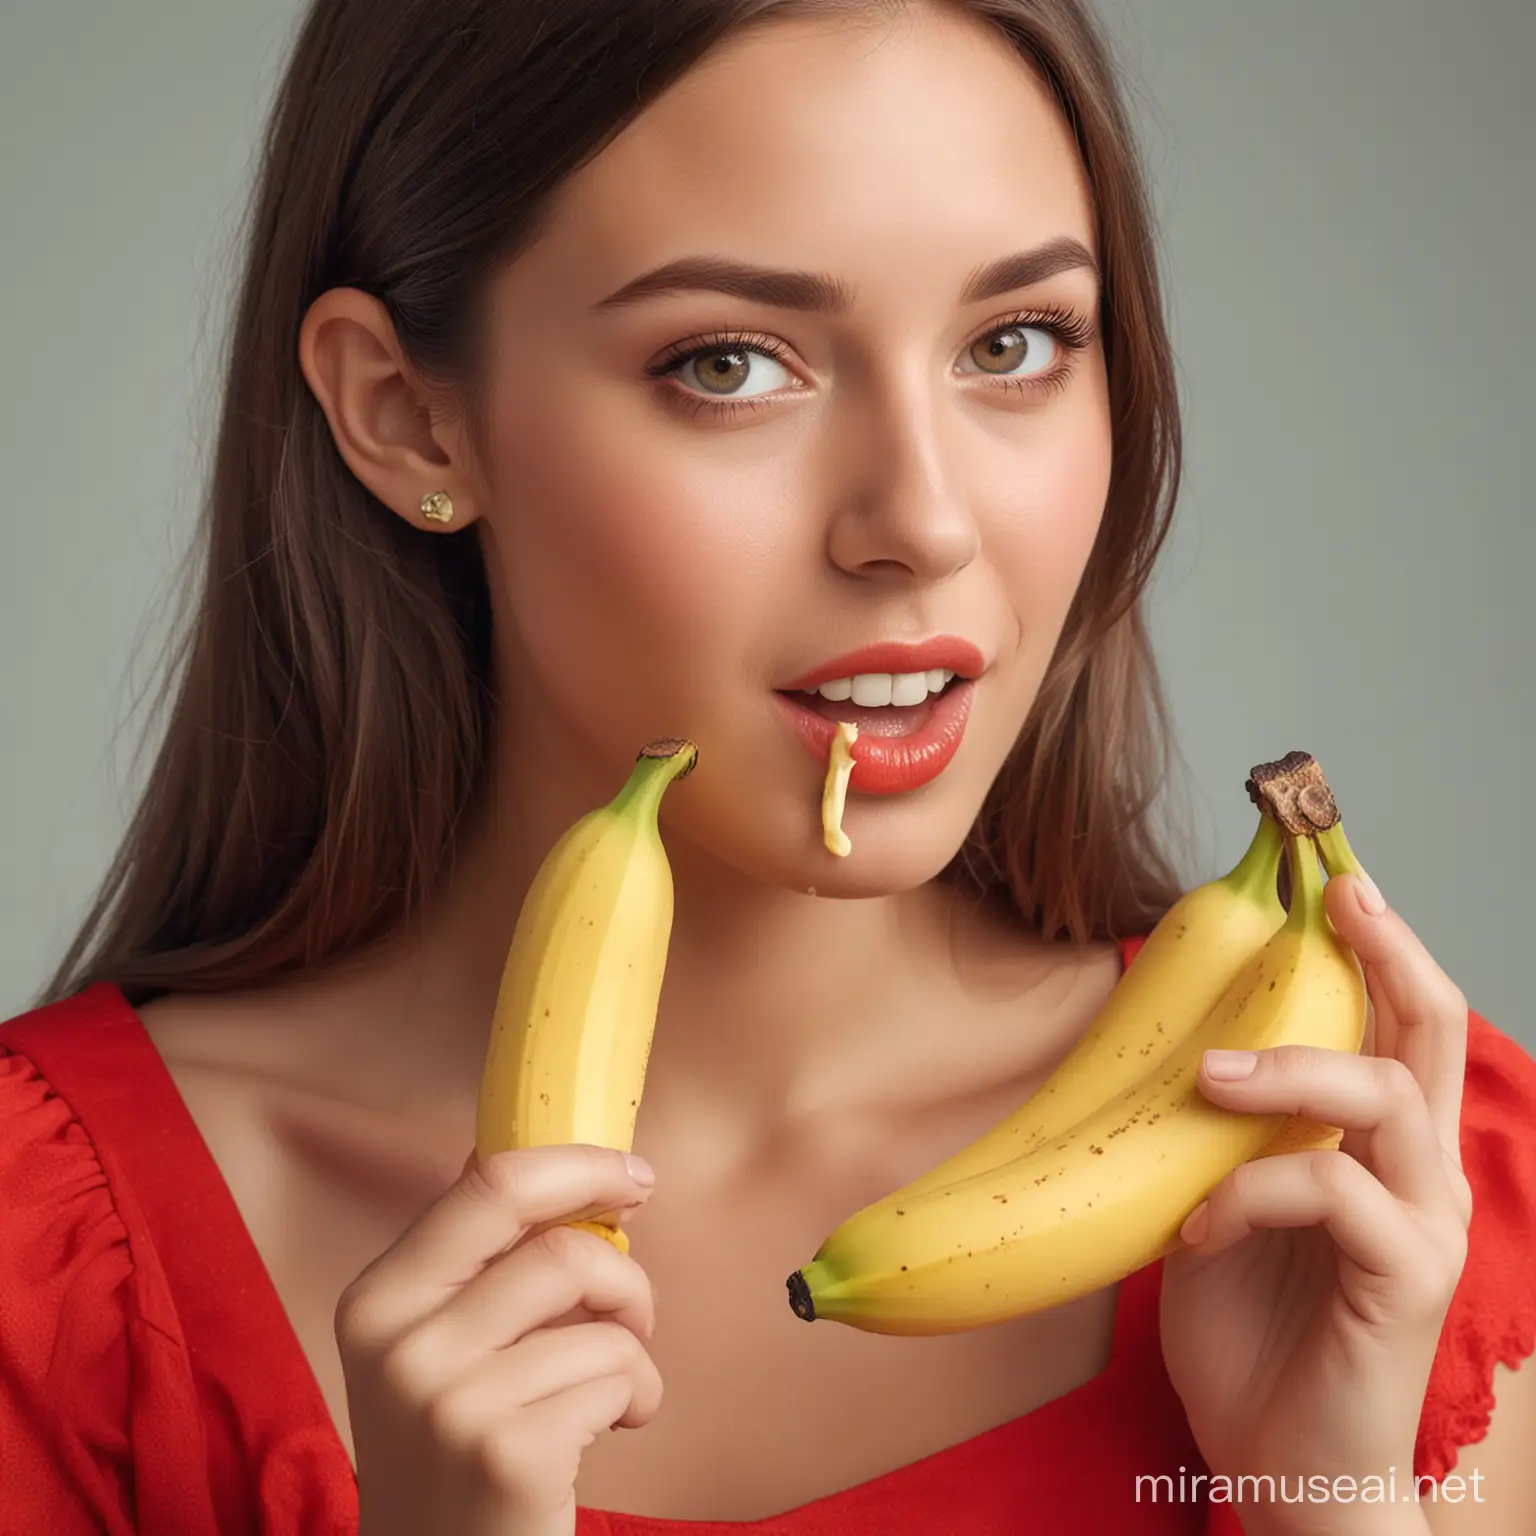 Closeup Realistic Girl in Red Dress Eating Creamy Banana